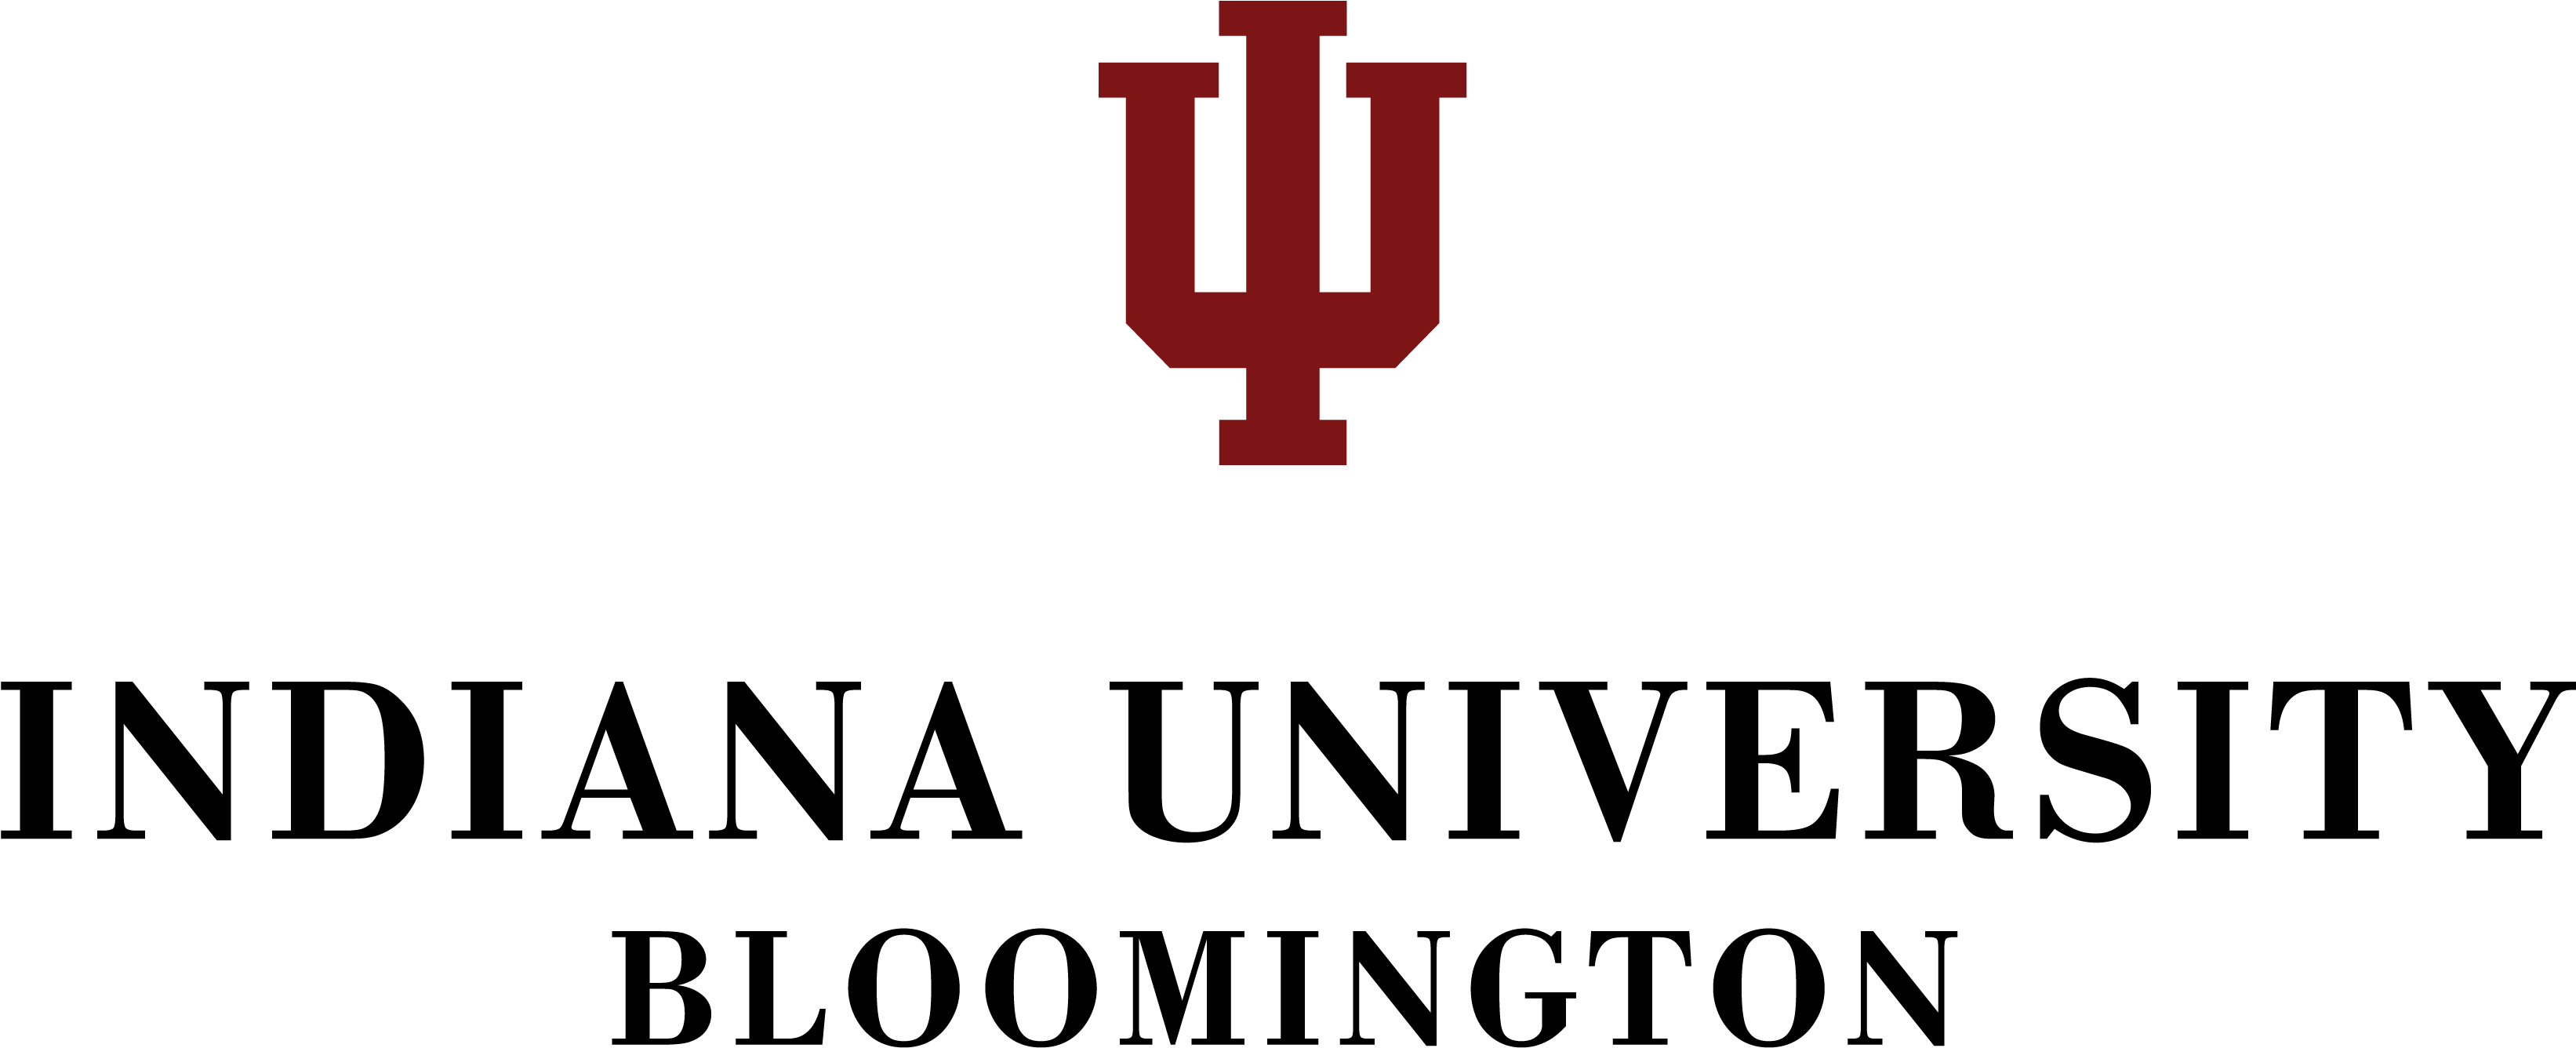 Studying Big Data At Iu Bloomington - Indiana University Logo Black And White (3373x1484), Png Download